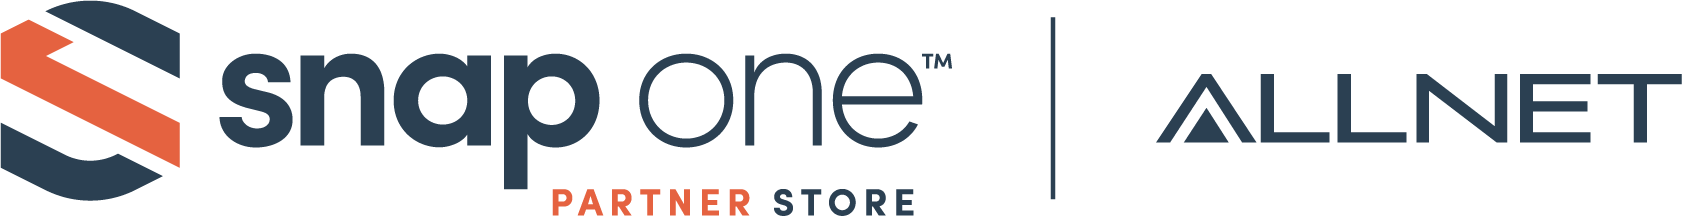 AllNet, a Snap One Partner Store